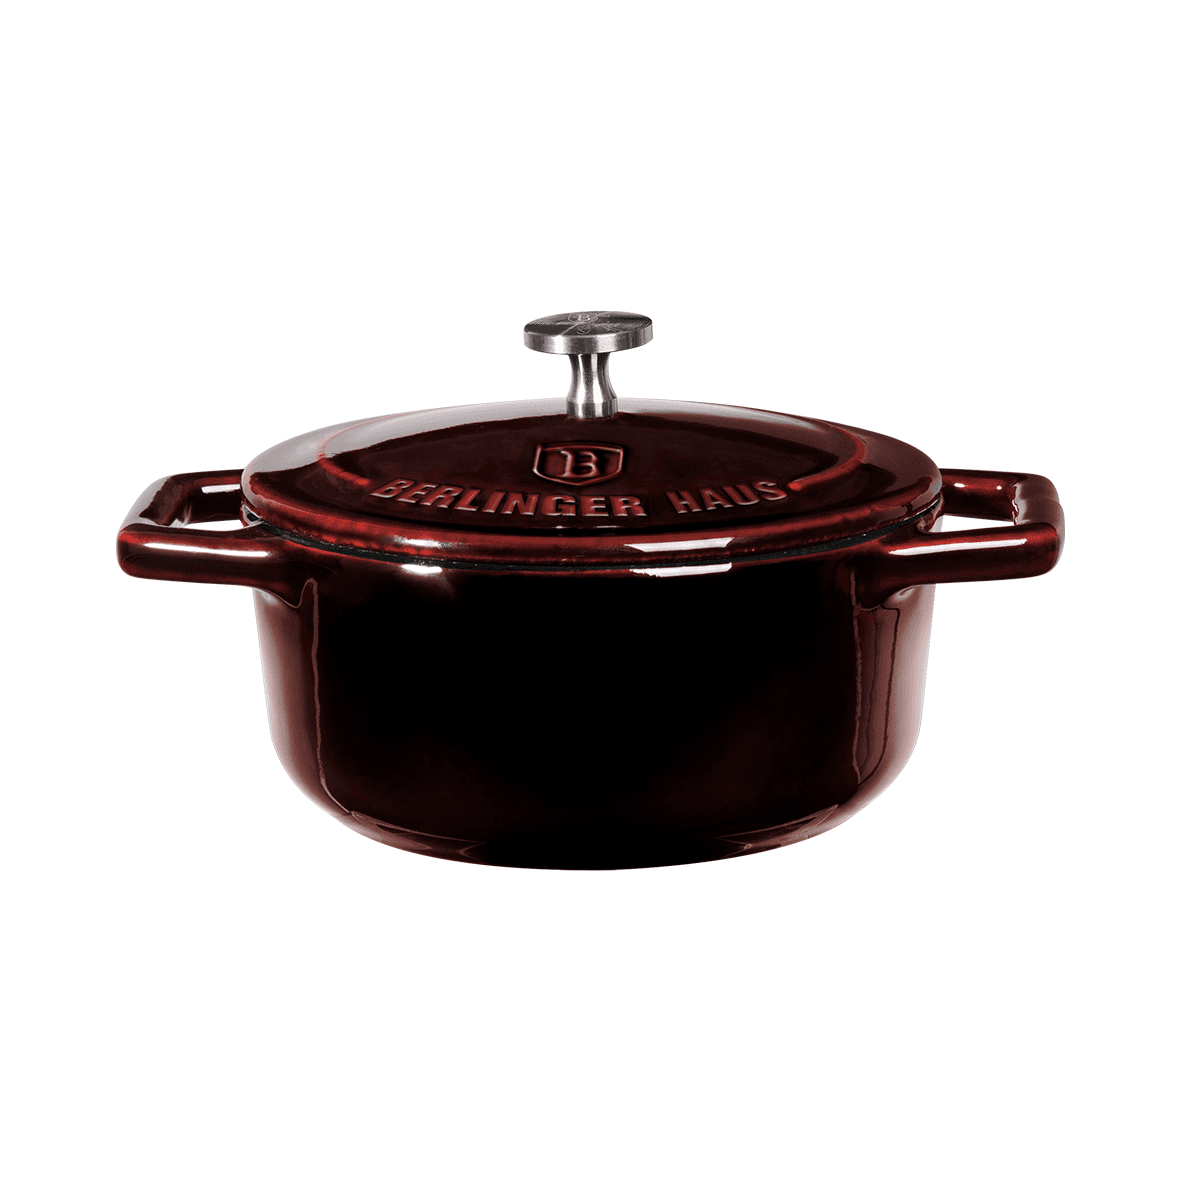 قدر طبخ صغير حديد مقاس 12 سم 550 مل صناعة المجر أحمر بيرلينجر هاوس Berlinger Haus Burgundy Cast Iron Mini Pot Cast Iron